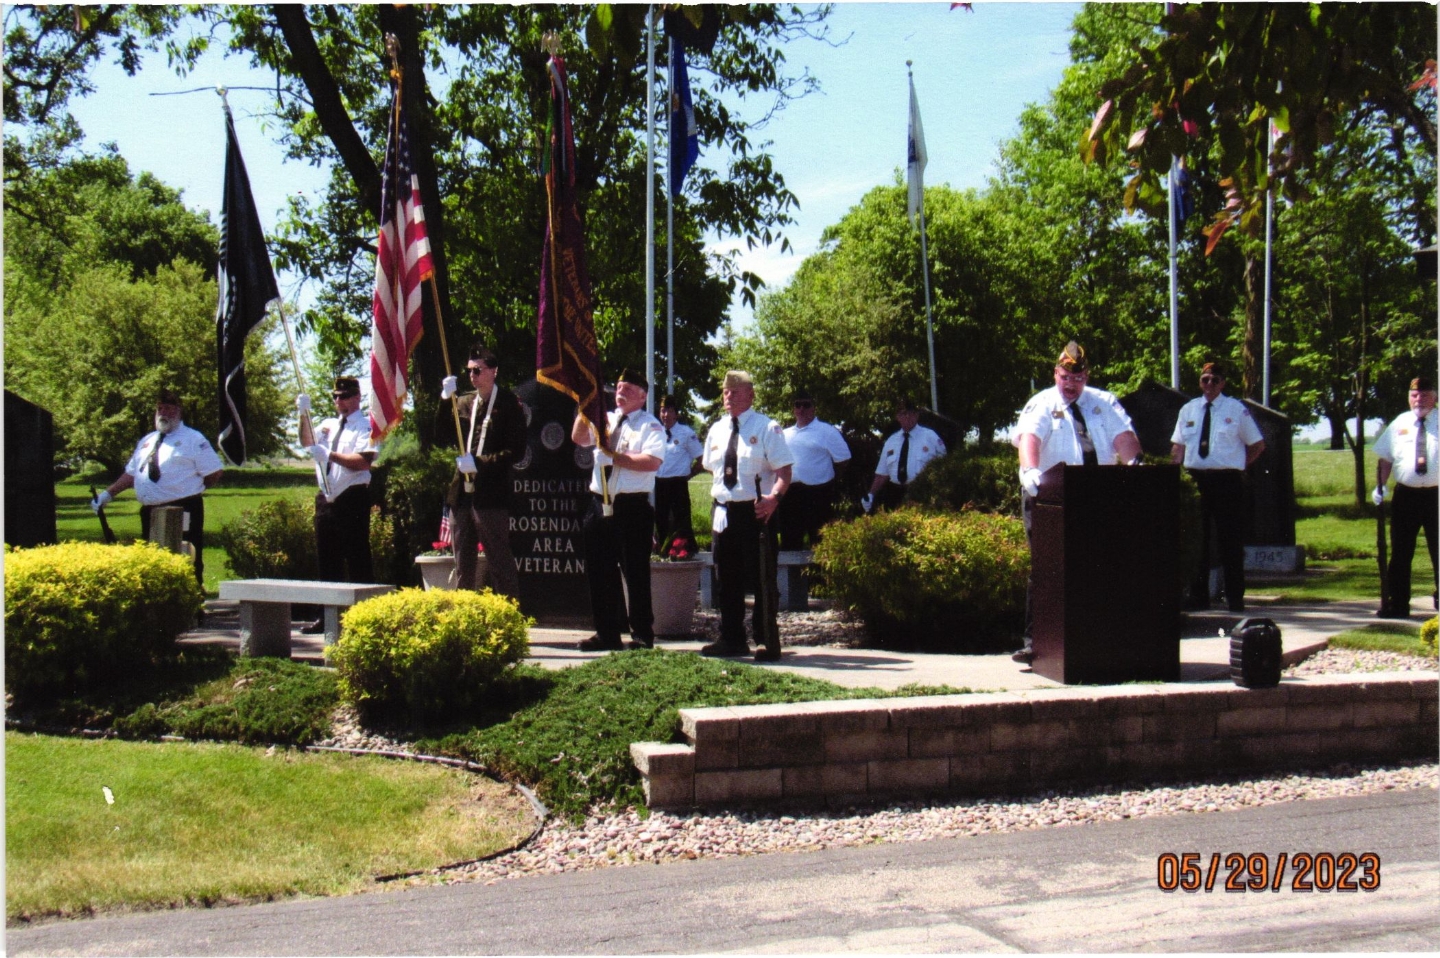 Rosendale VFW Post 10195 presenting honors to the fallen on Memorial Day at the Rosendale Veterans Memorial.